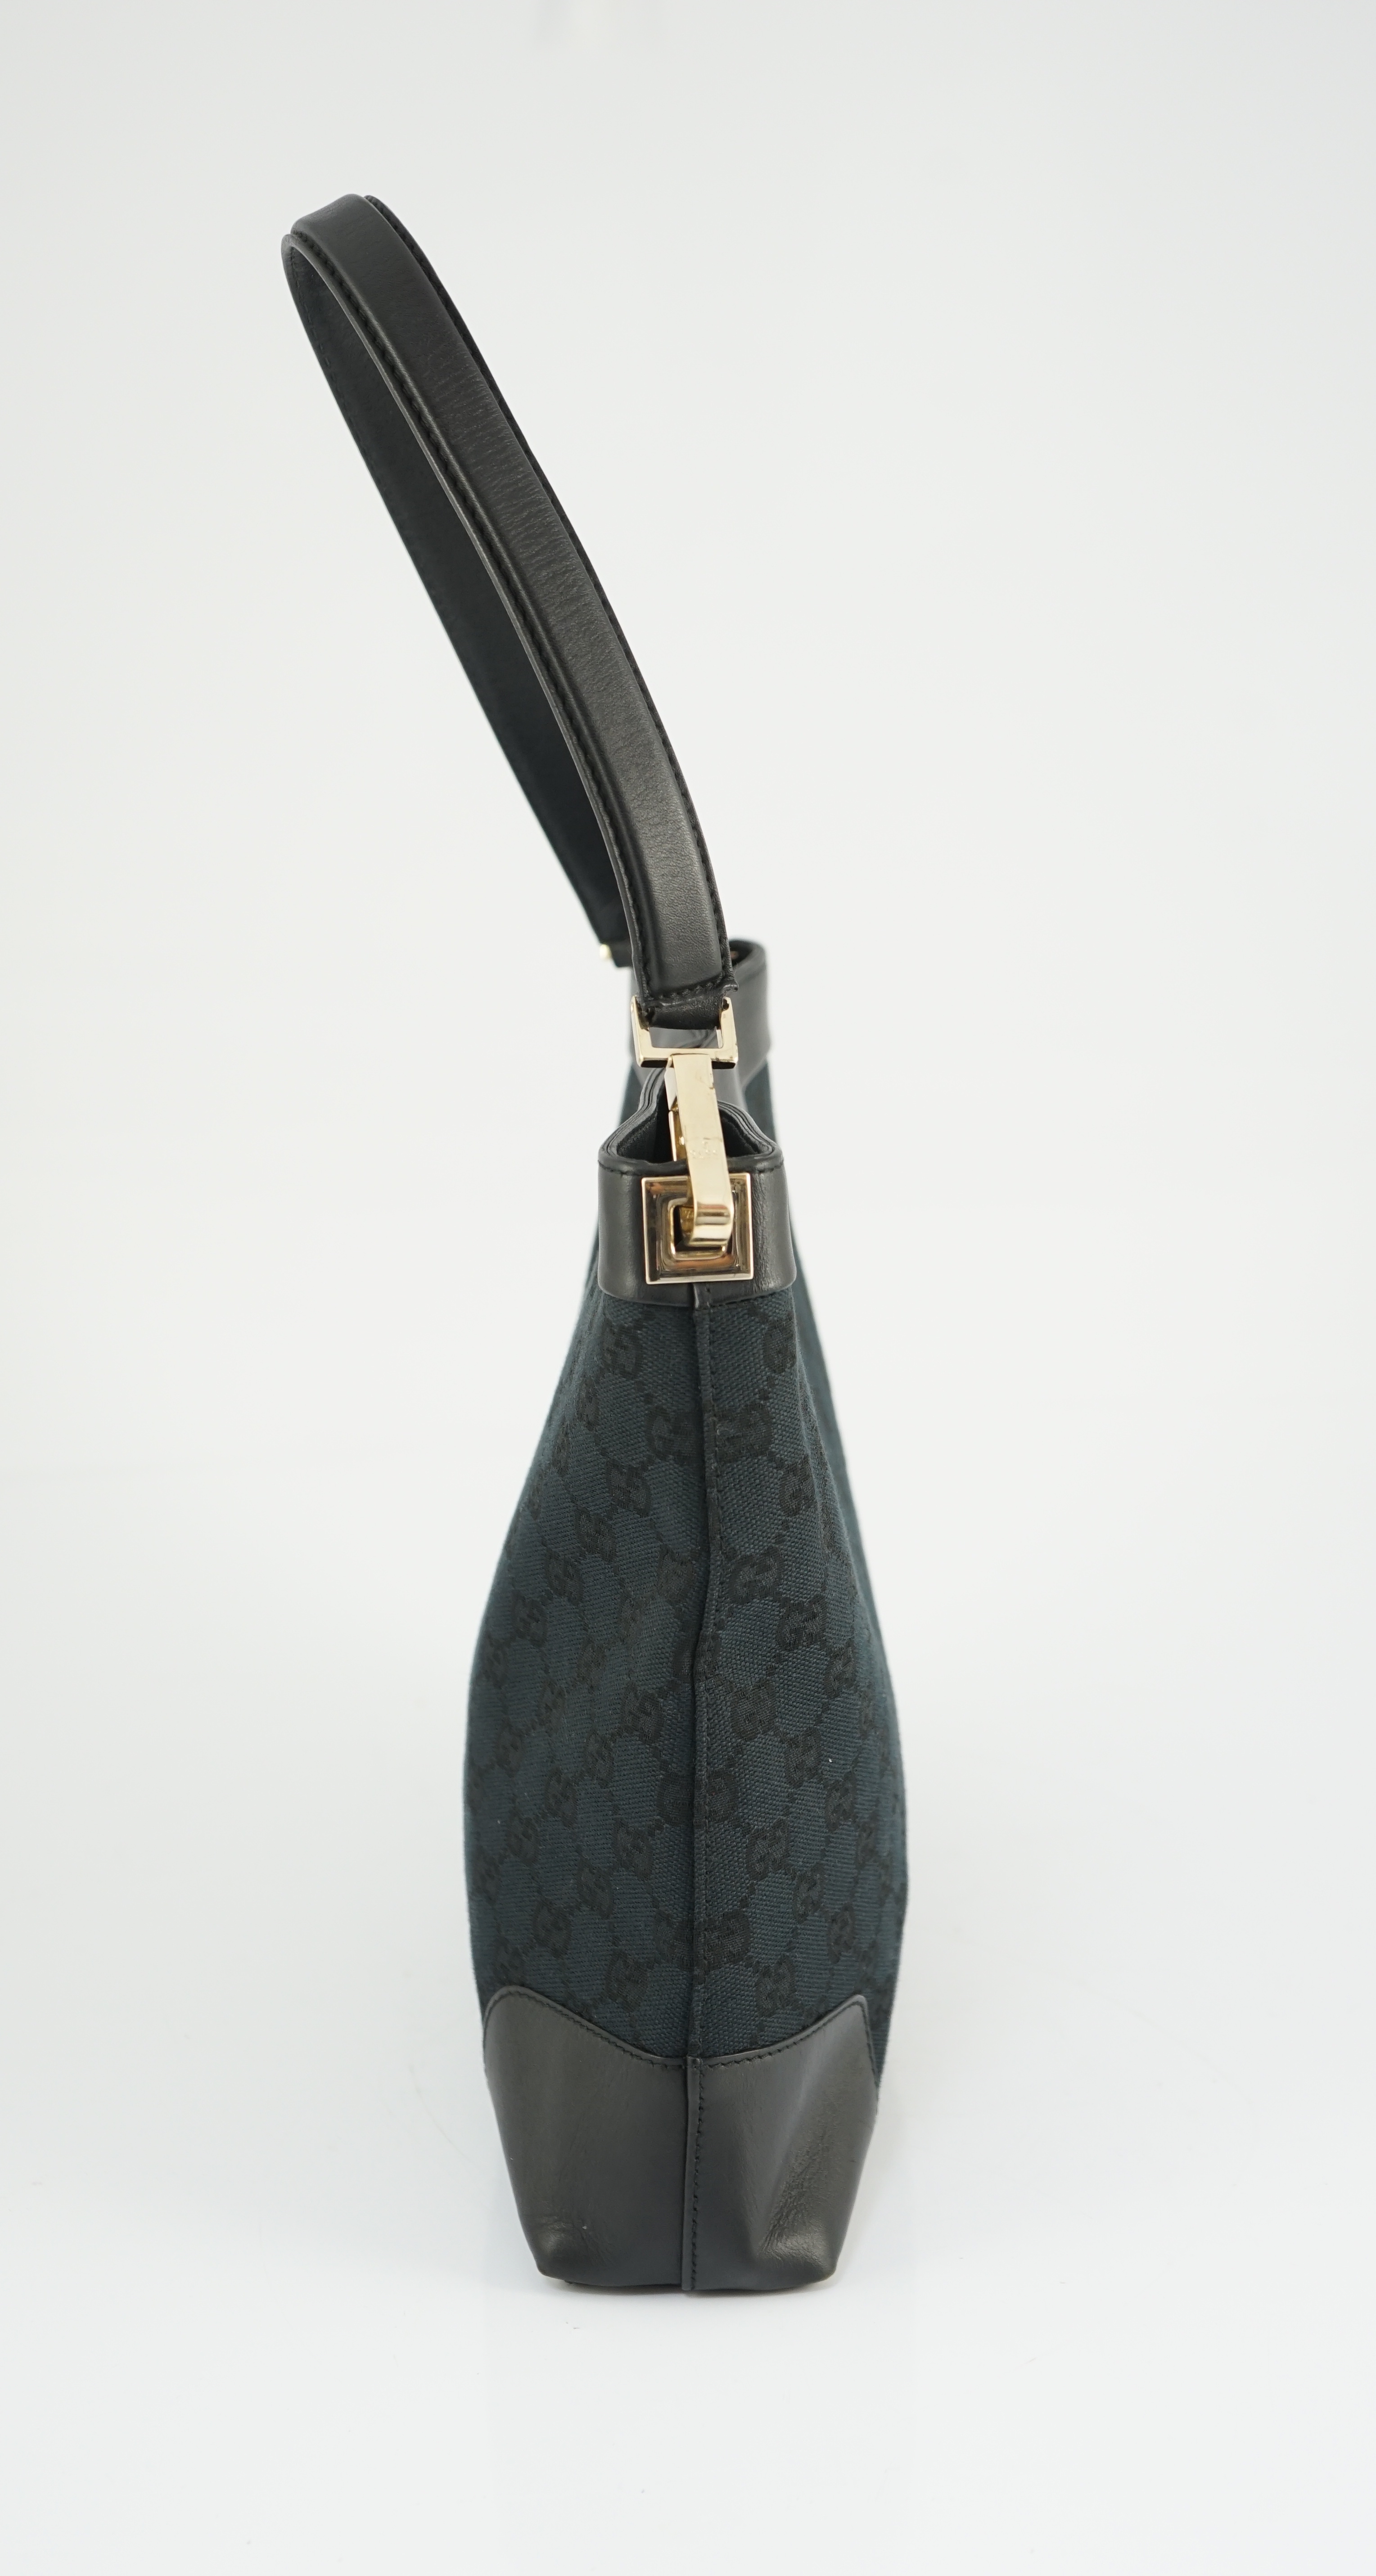 A Gucci black GG canvas shoulder bag width 26cm, depth 6cm, approx height 25cm